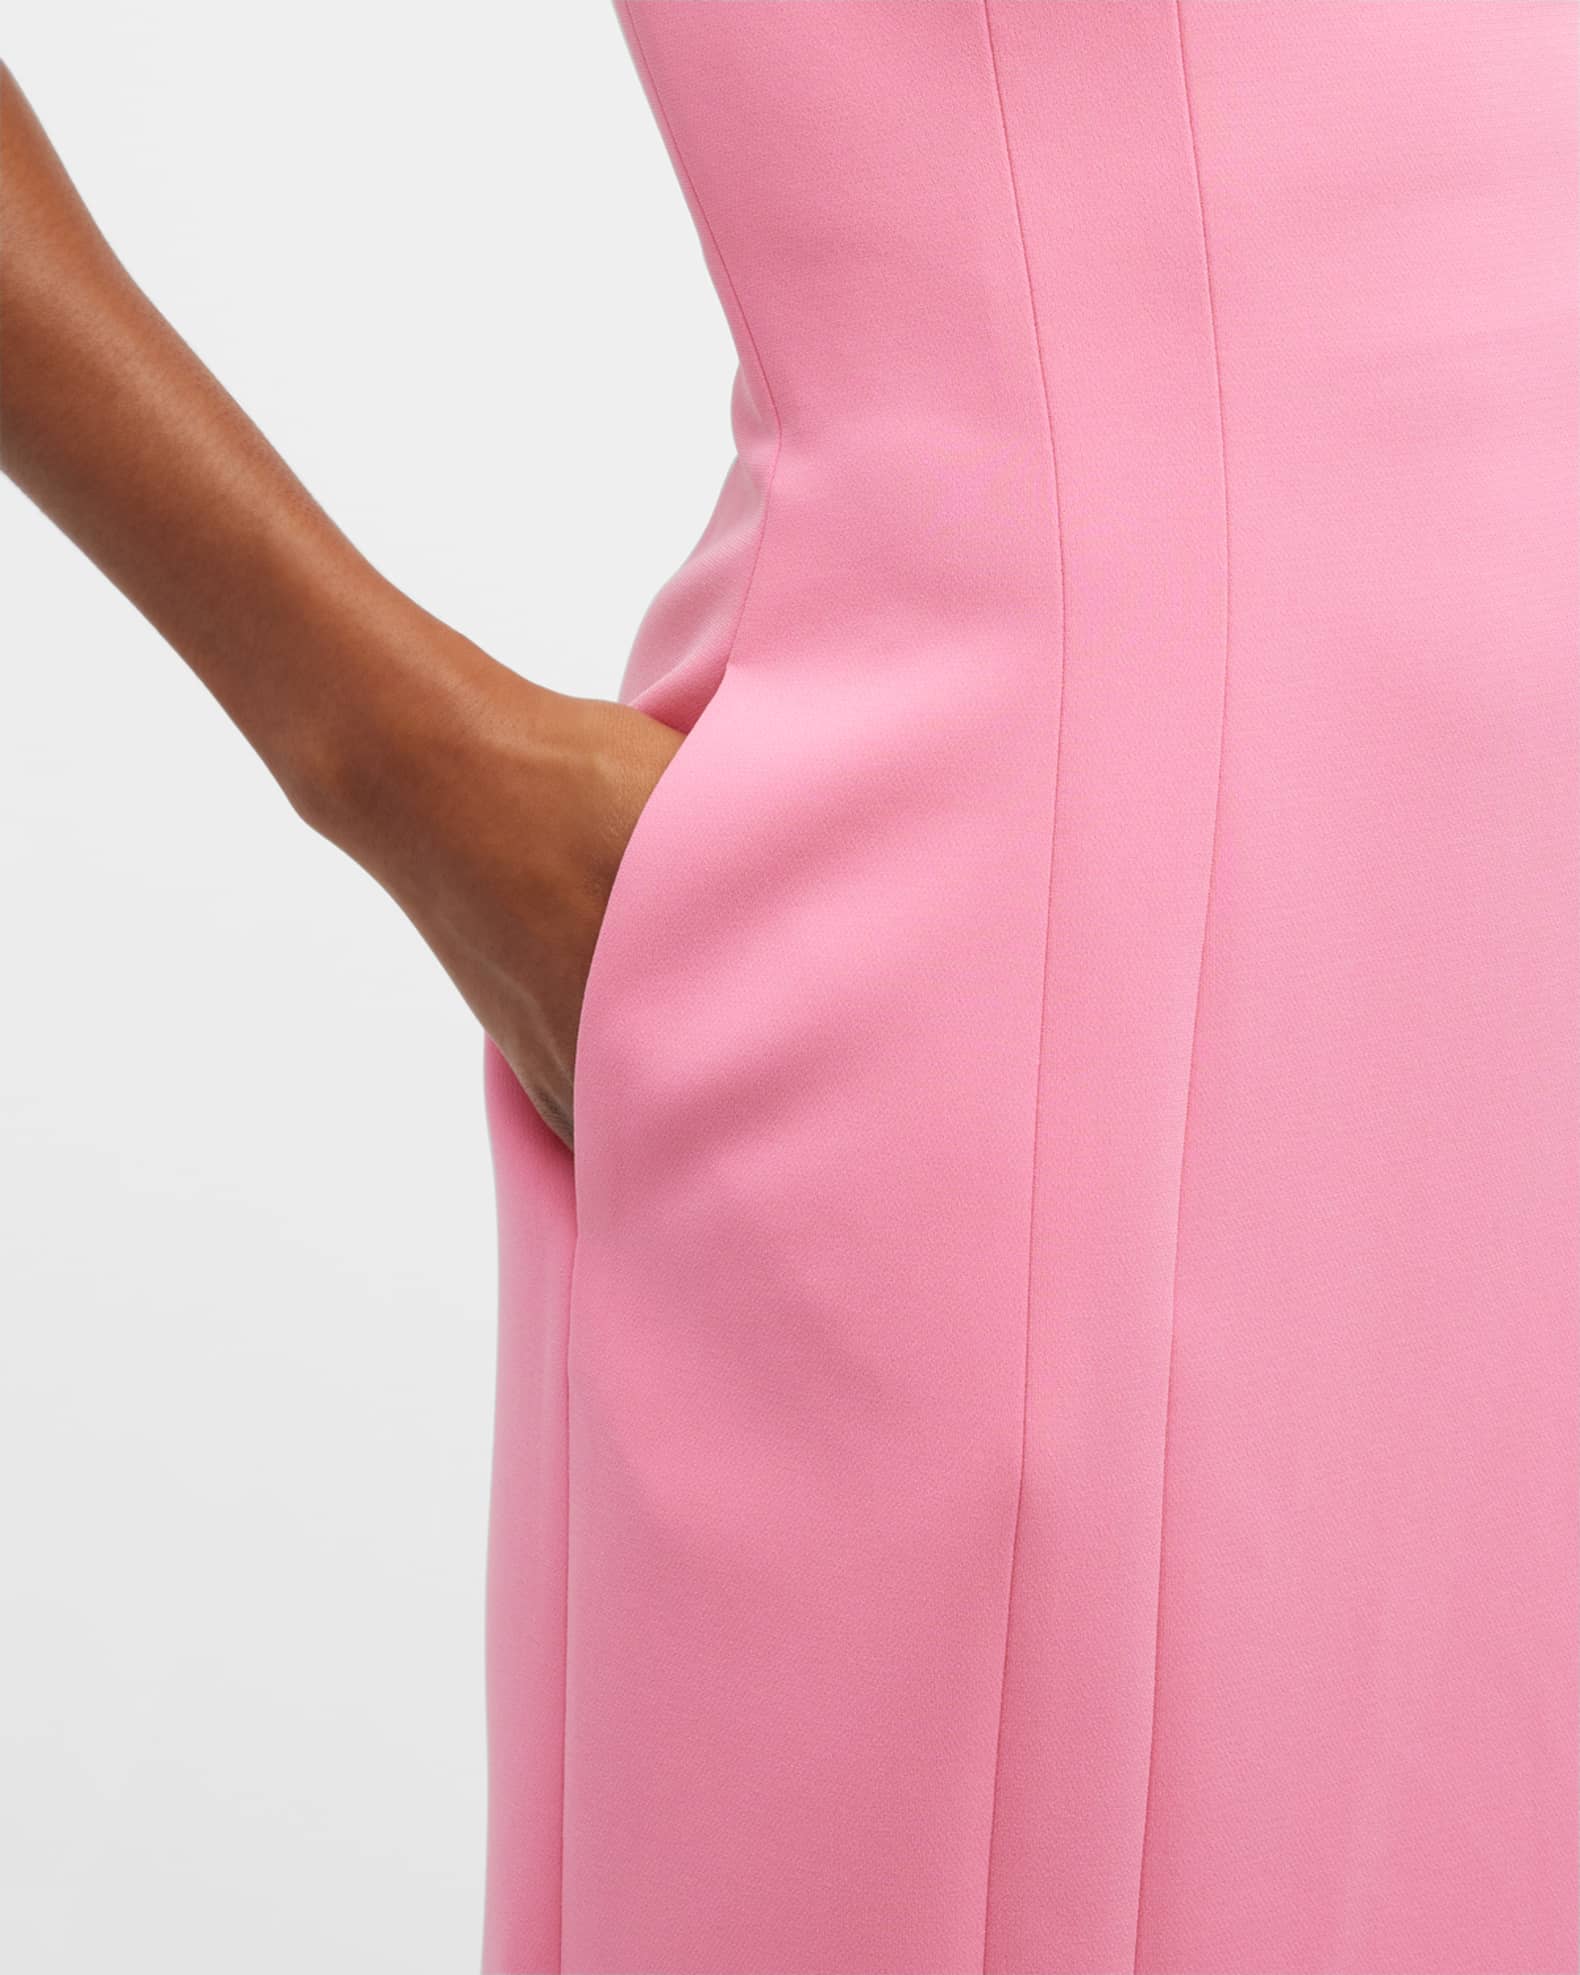 A.L.C. Elizabeth Strapless Midi Dress | Neiman Marcus